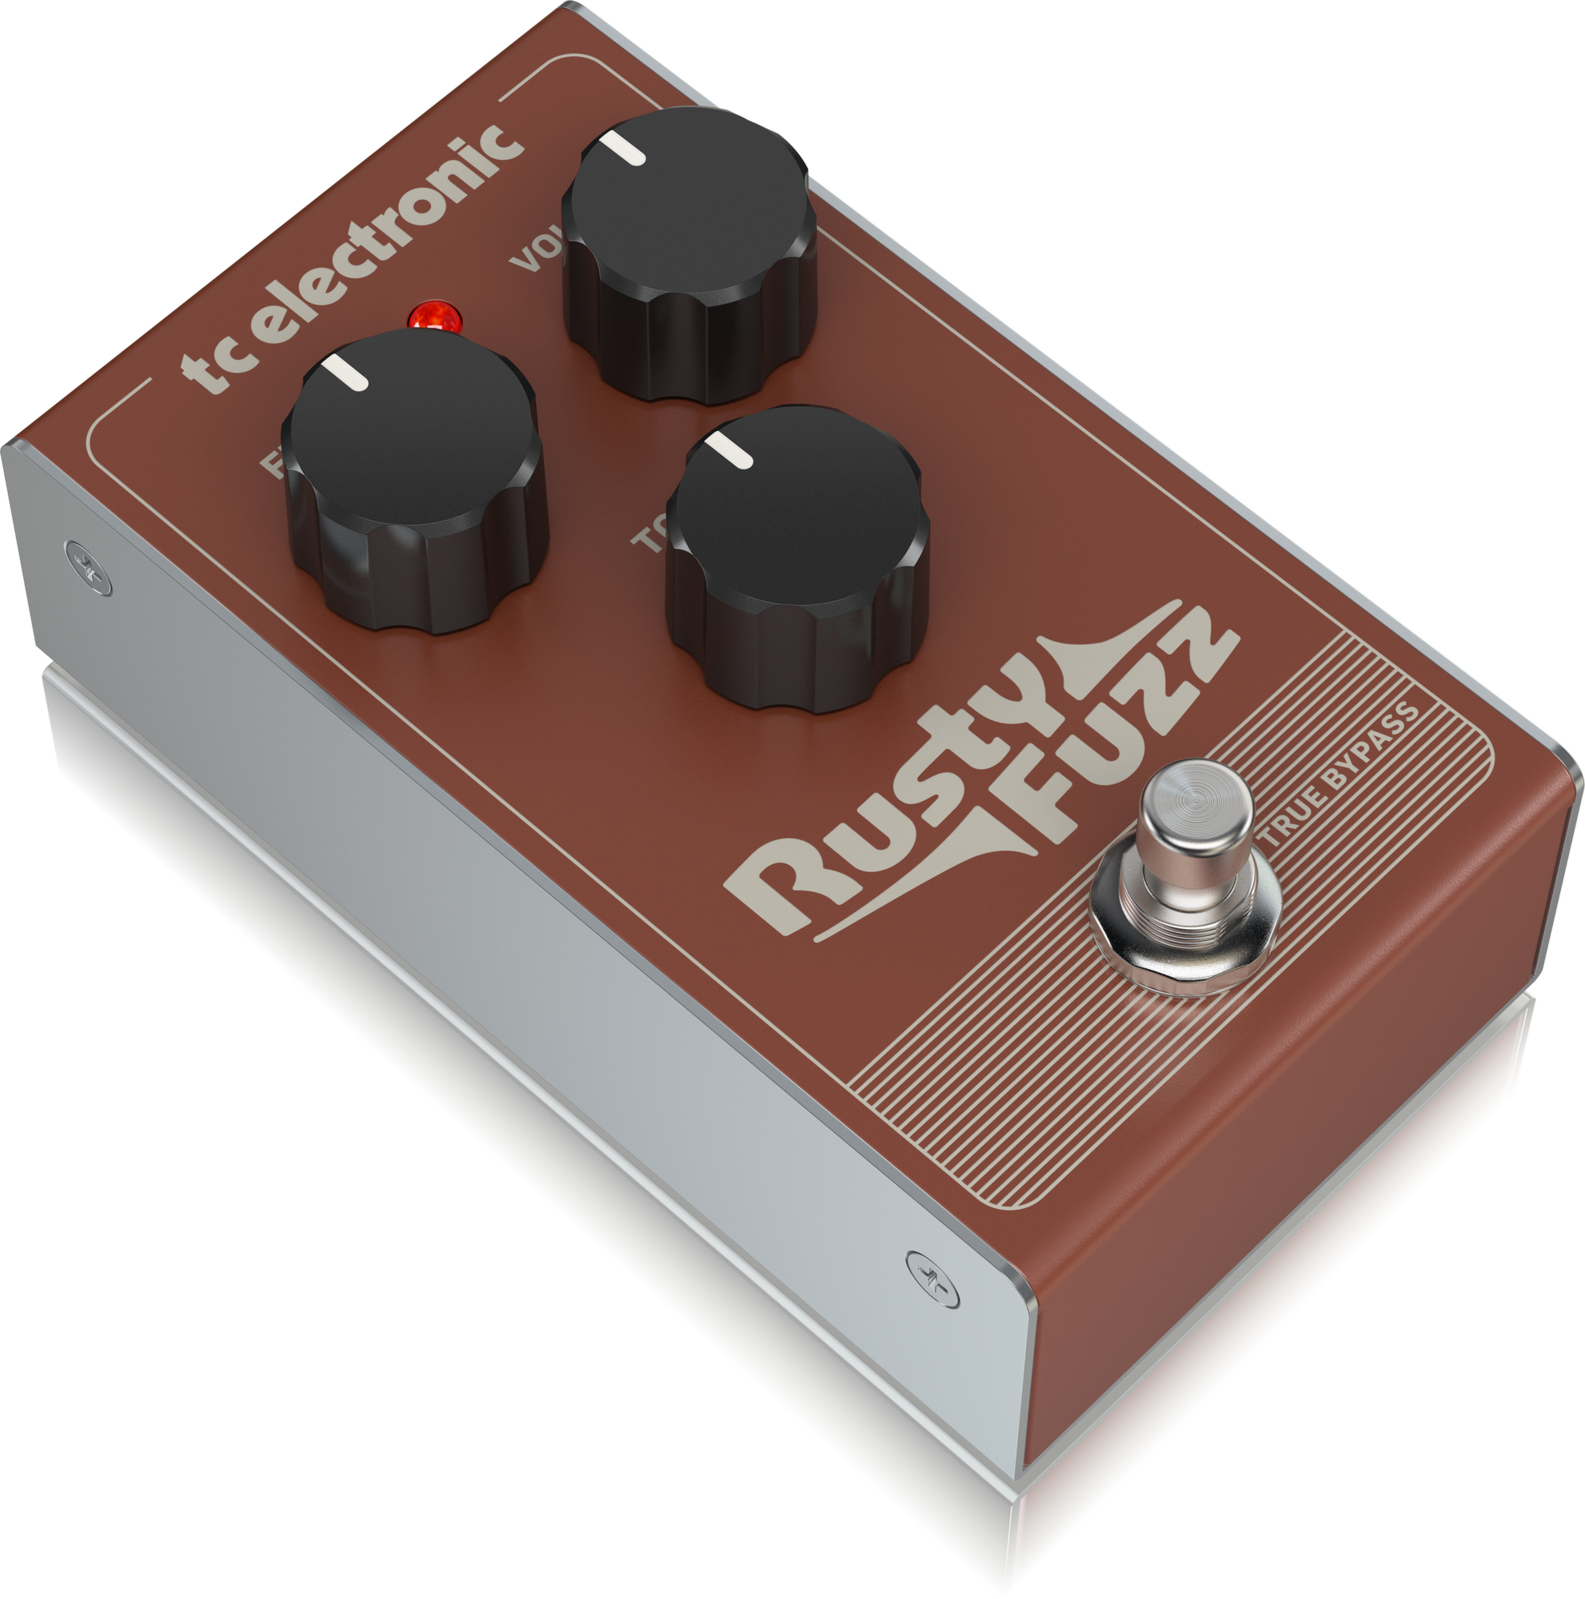 TC Electronic Rusty Fuzz